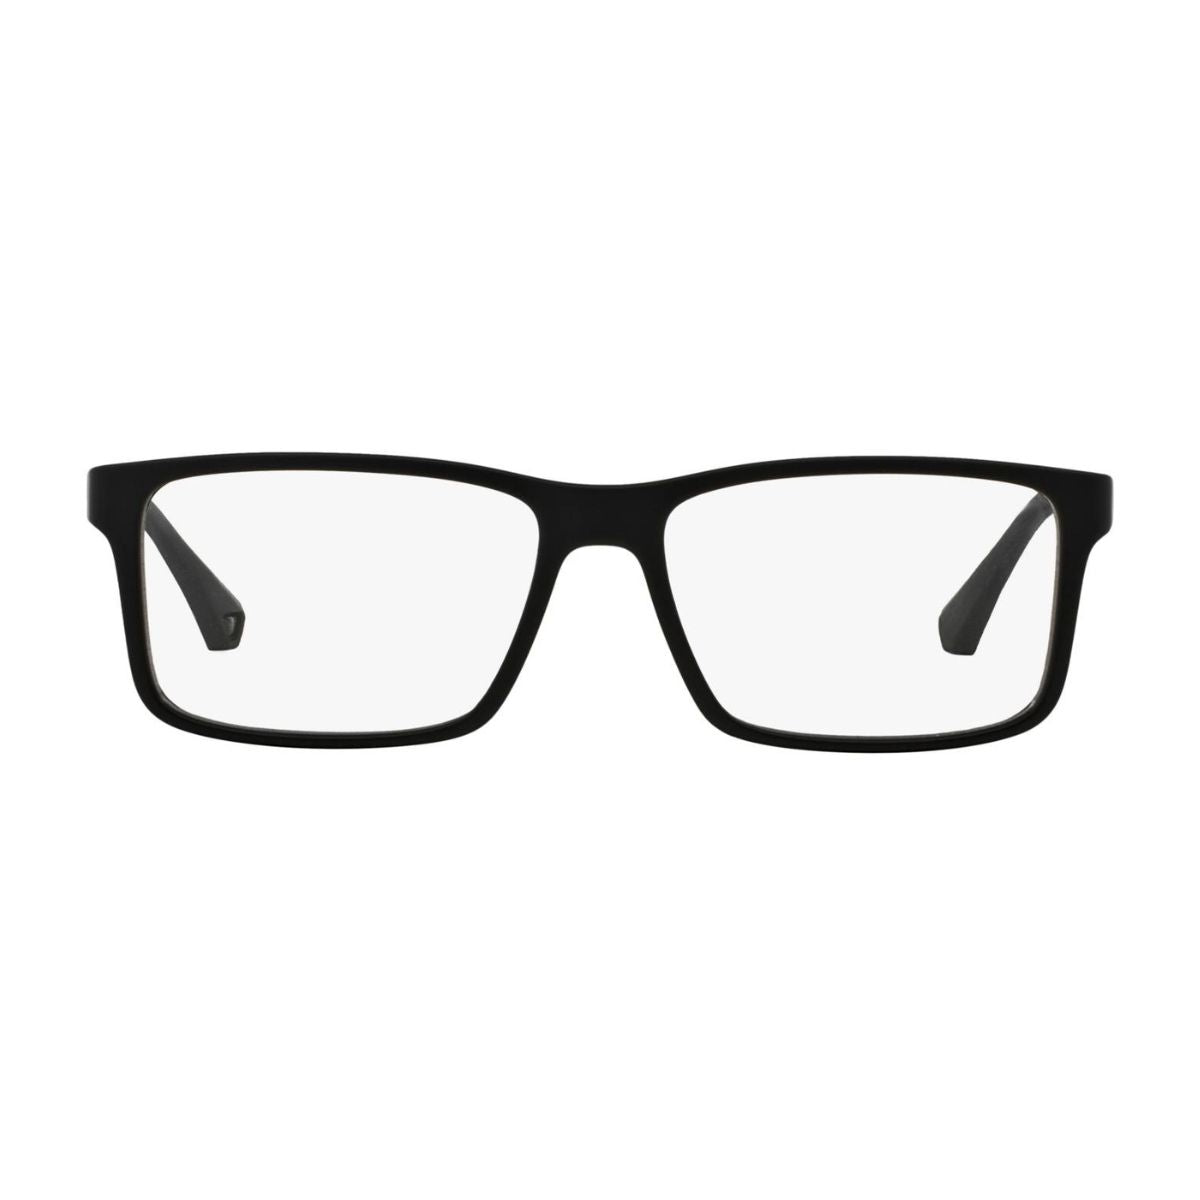 "Buy Emporio Armani 3038 5063 Black Eyeglasses Frame For Men's At Optorium"